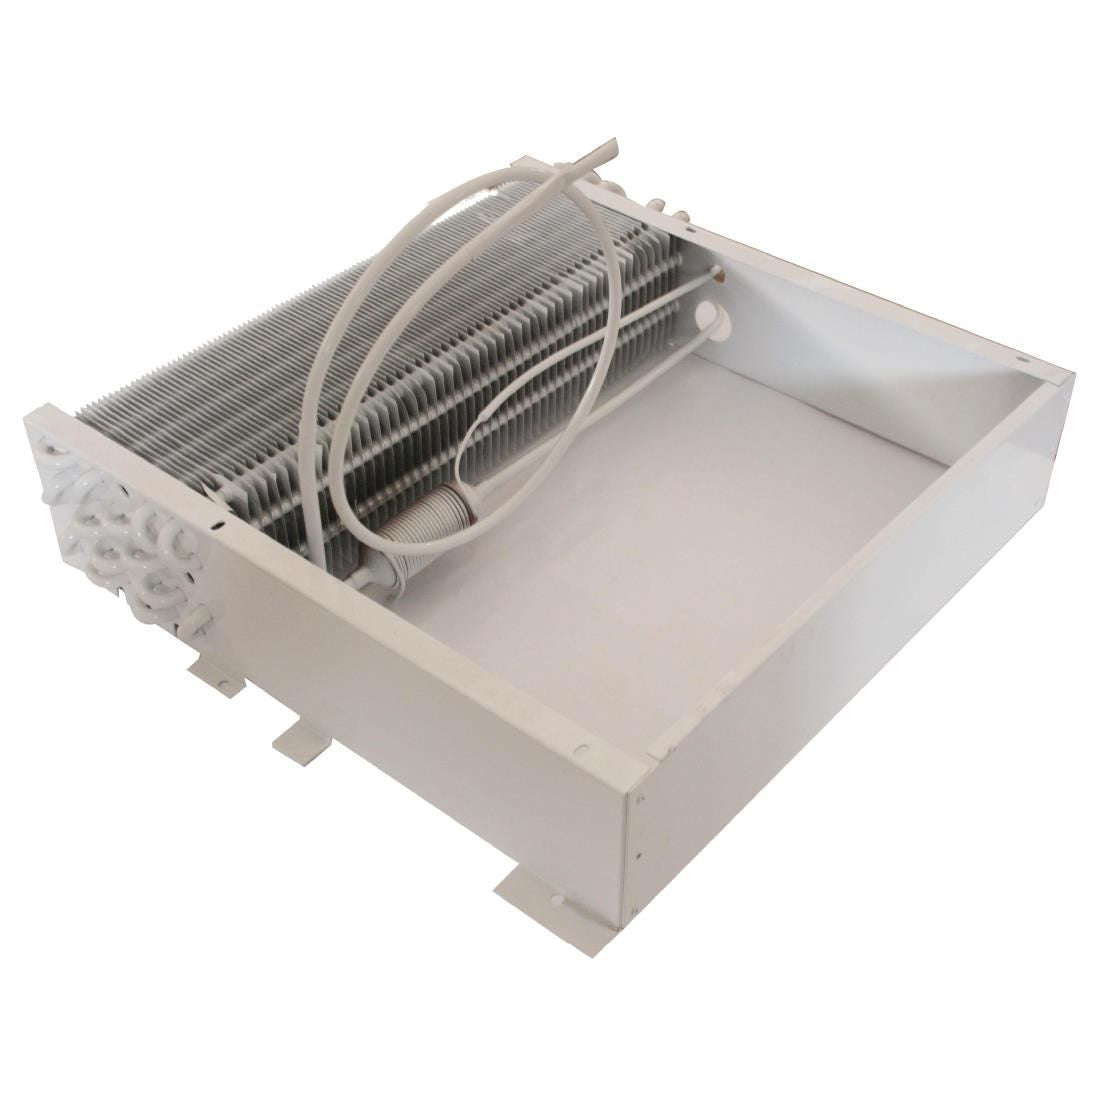 Evaporator For Upright Freezer AB904 JD Catering Equipment Solutions Ltd